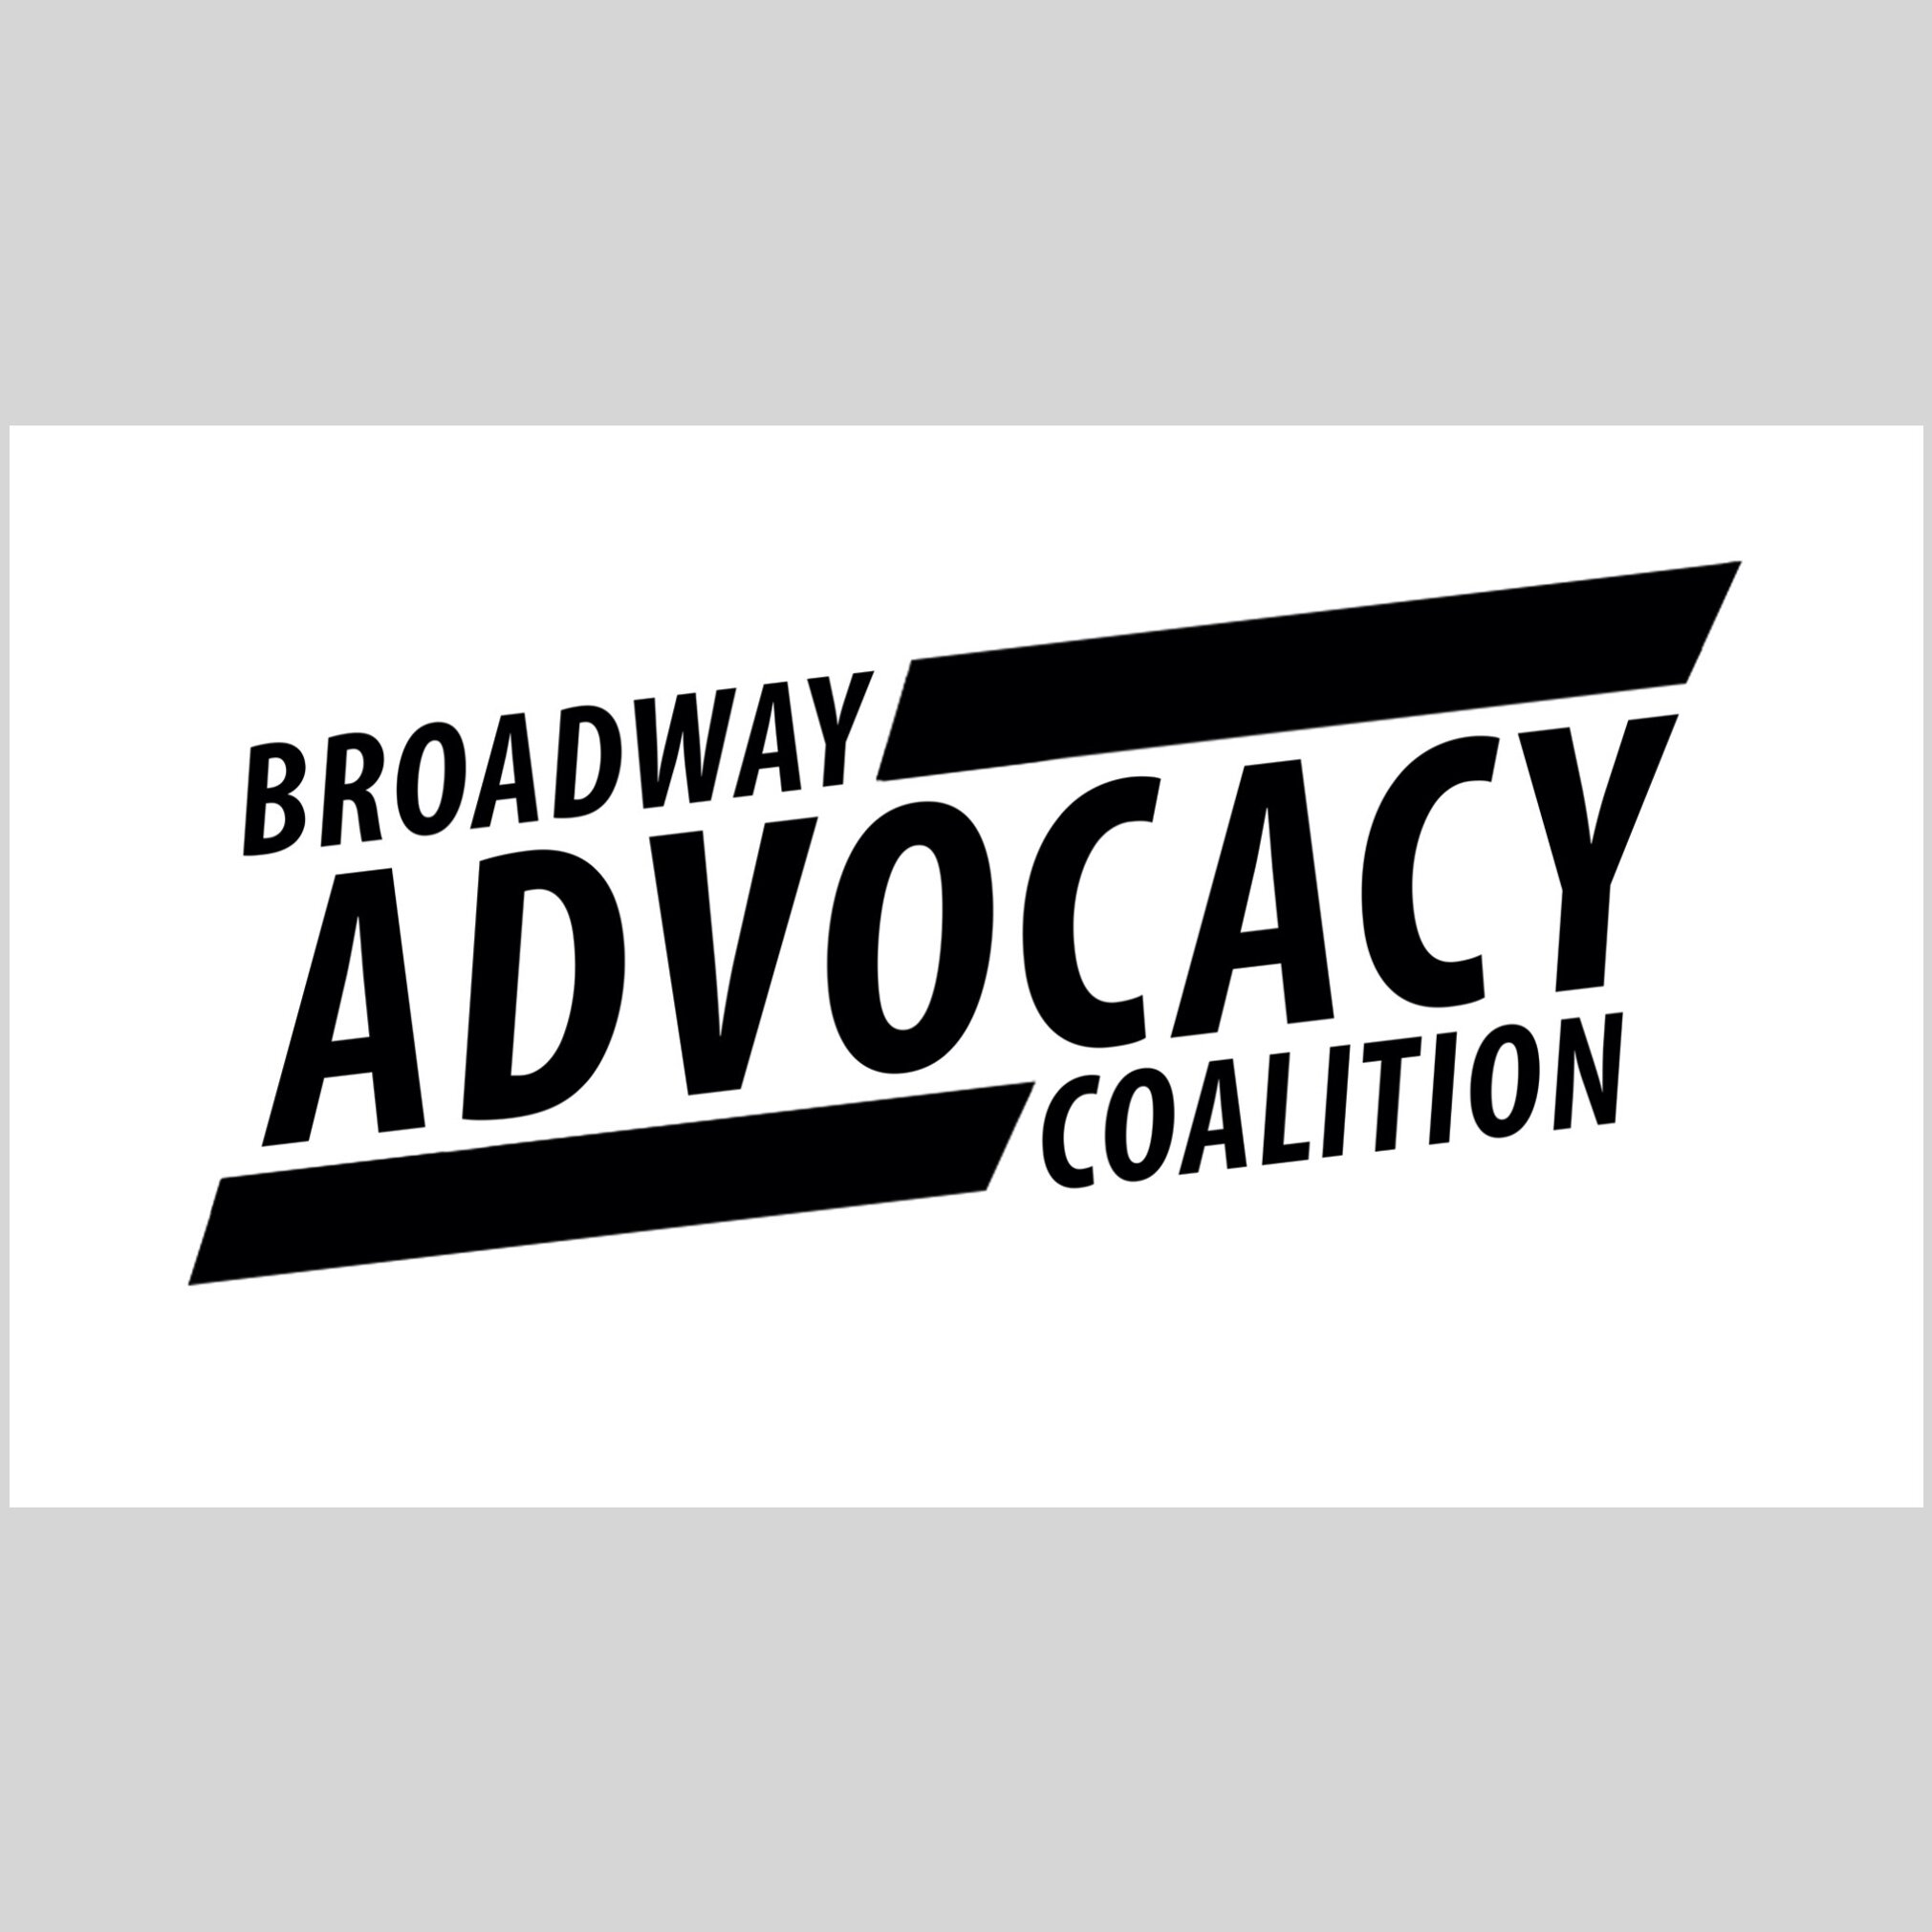 Broadway Advocacy Coalition "The Invitation" Series